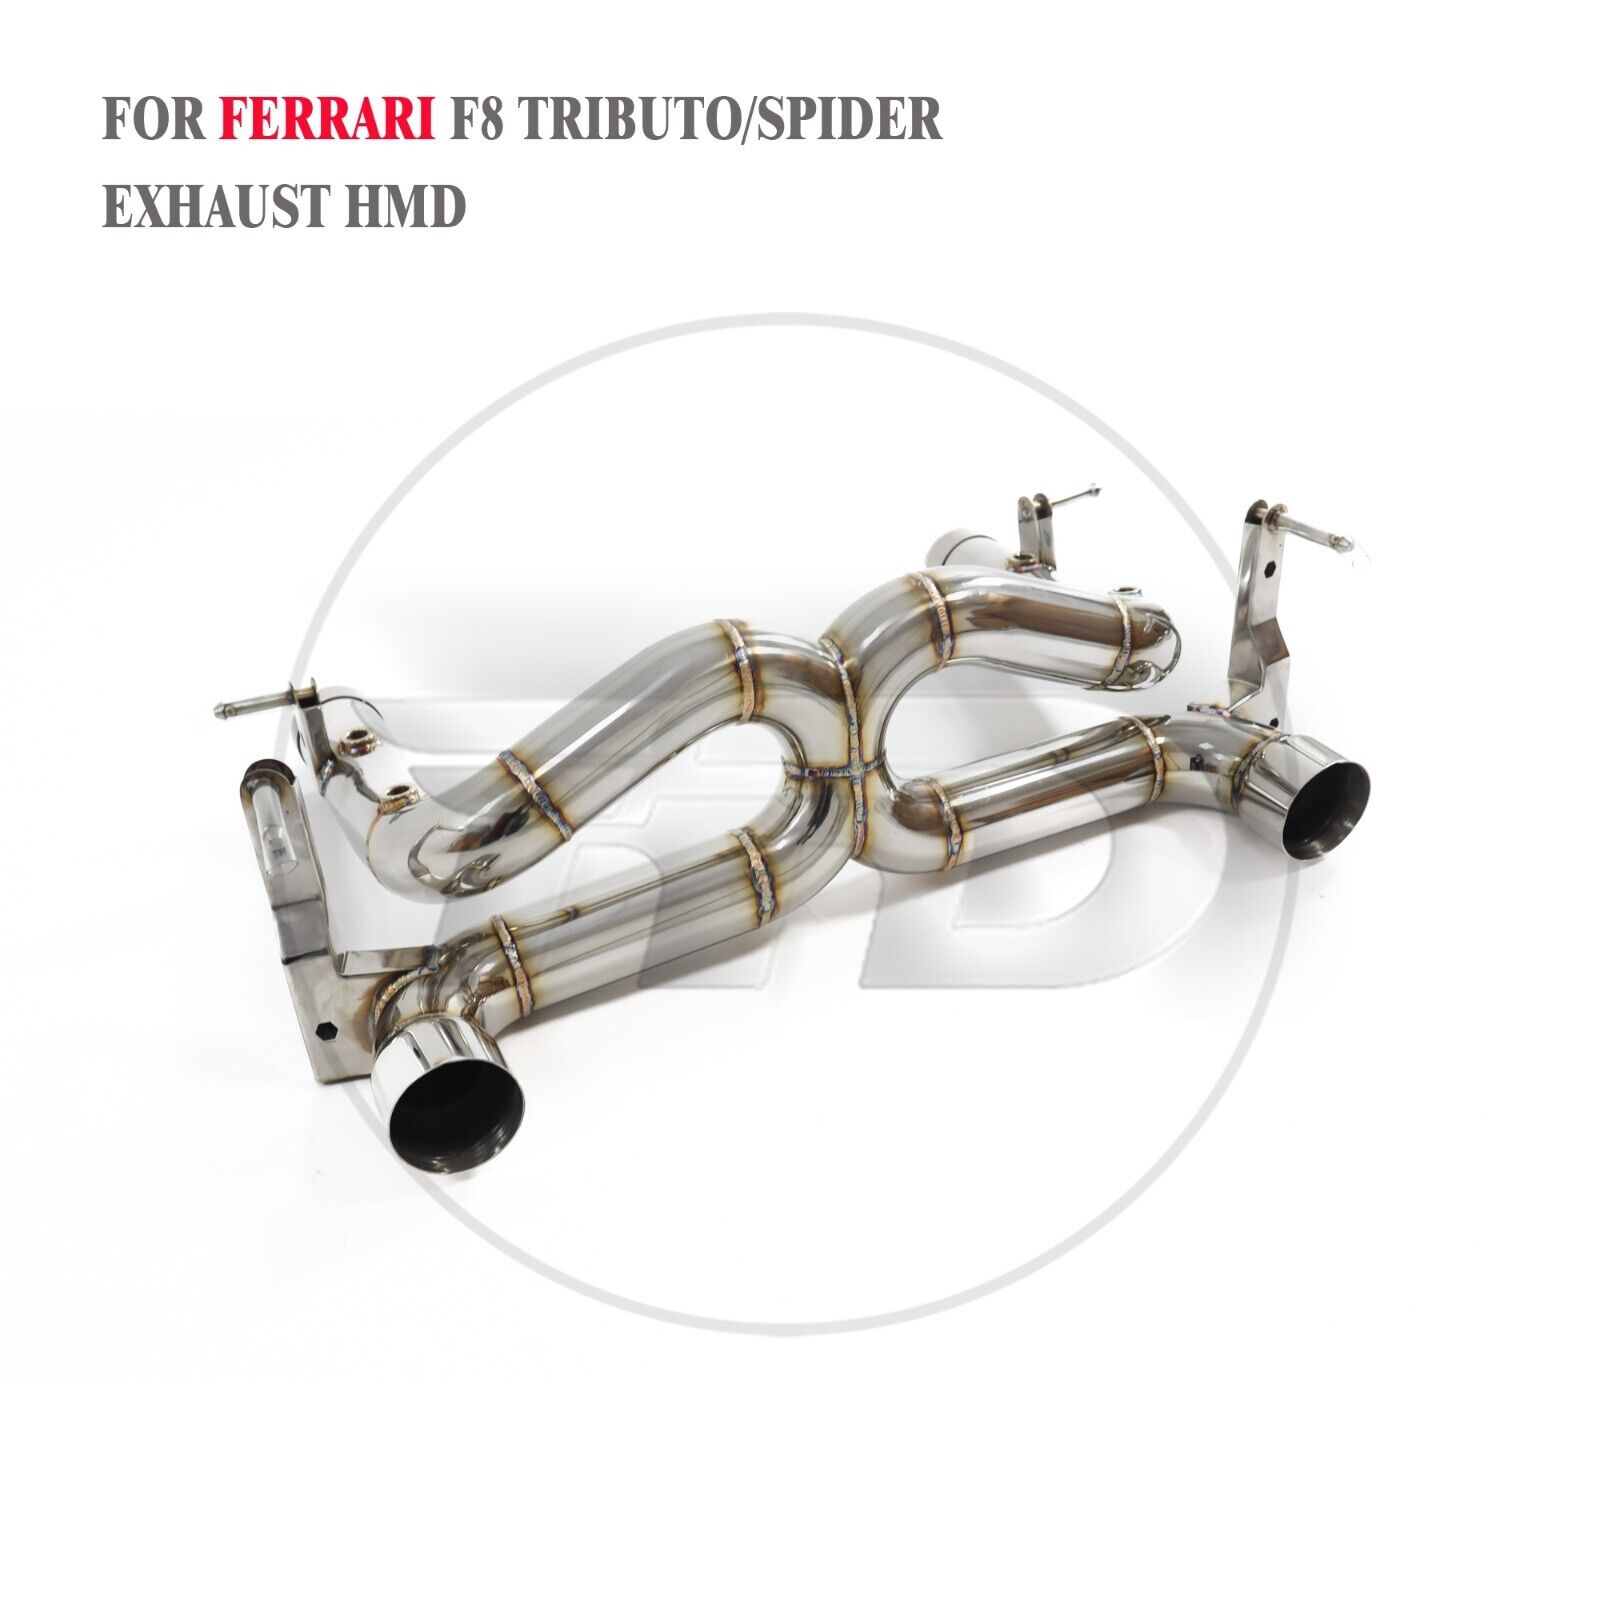 HMD Exhaust Pipe for Ferrari F8 Tributo Spider 3.9T V8